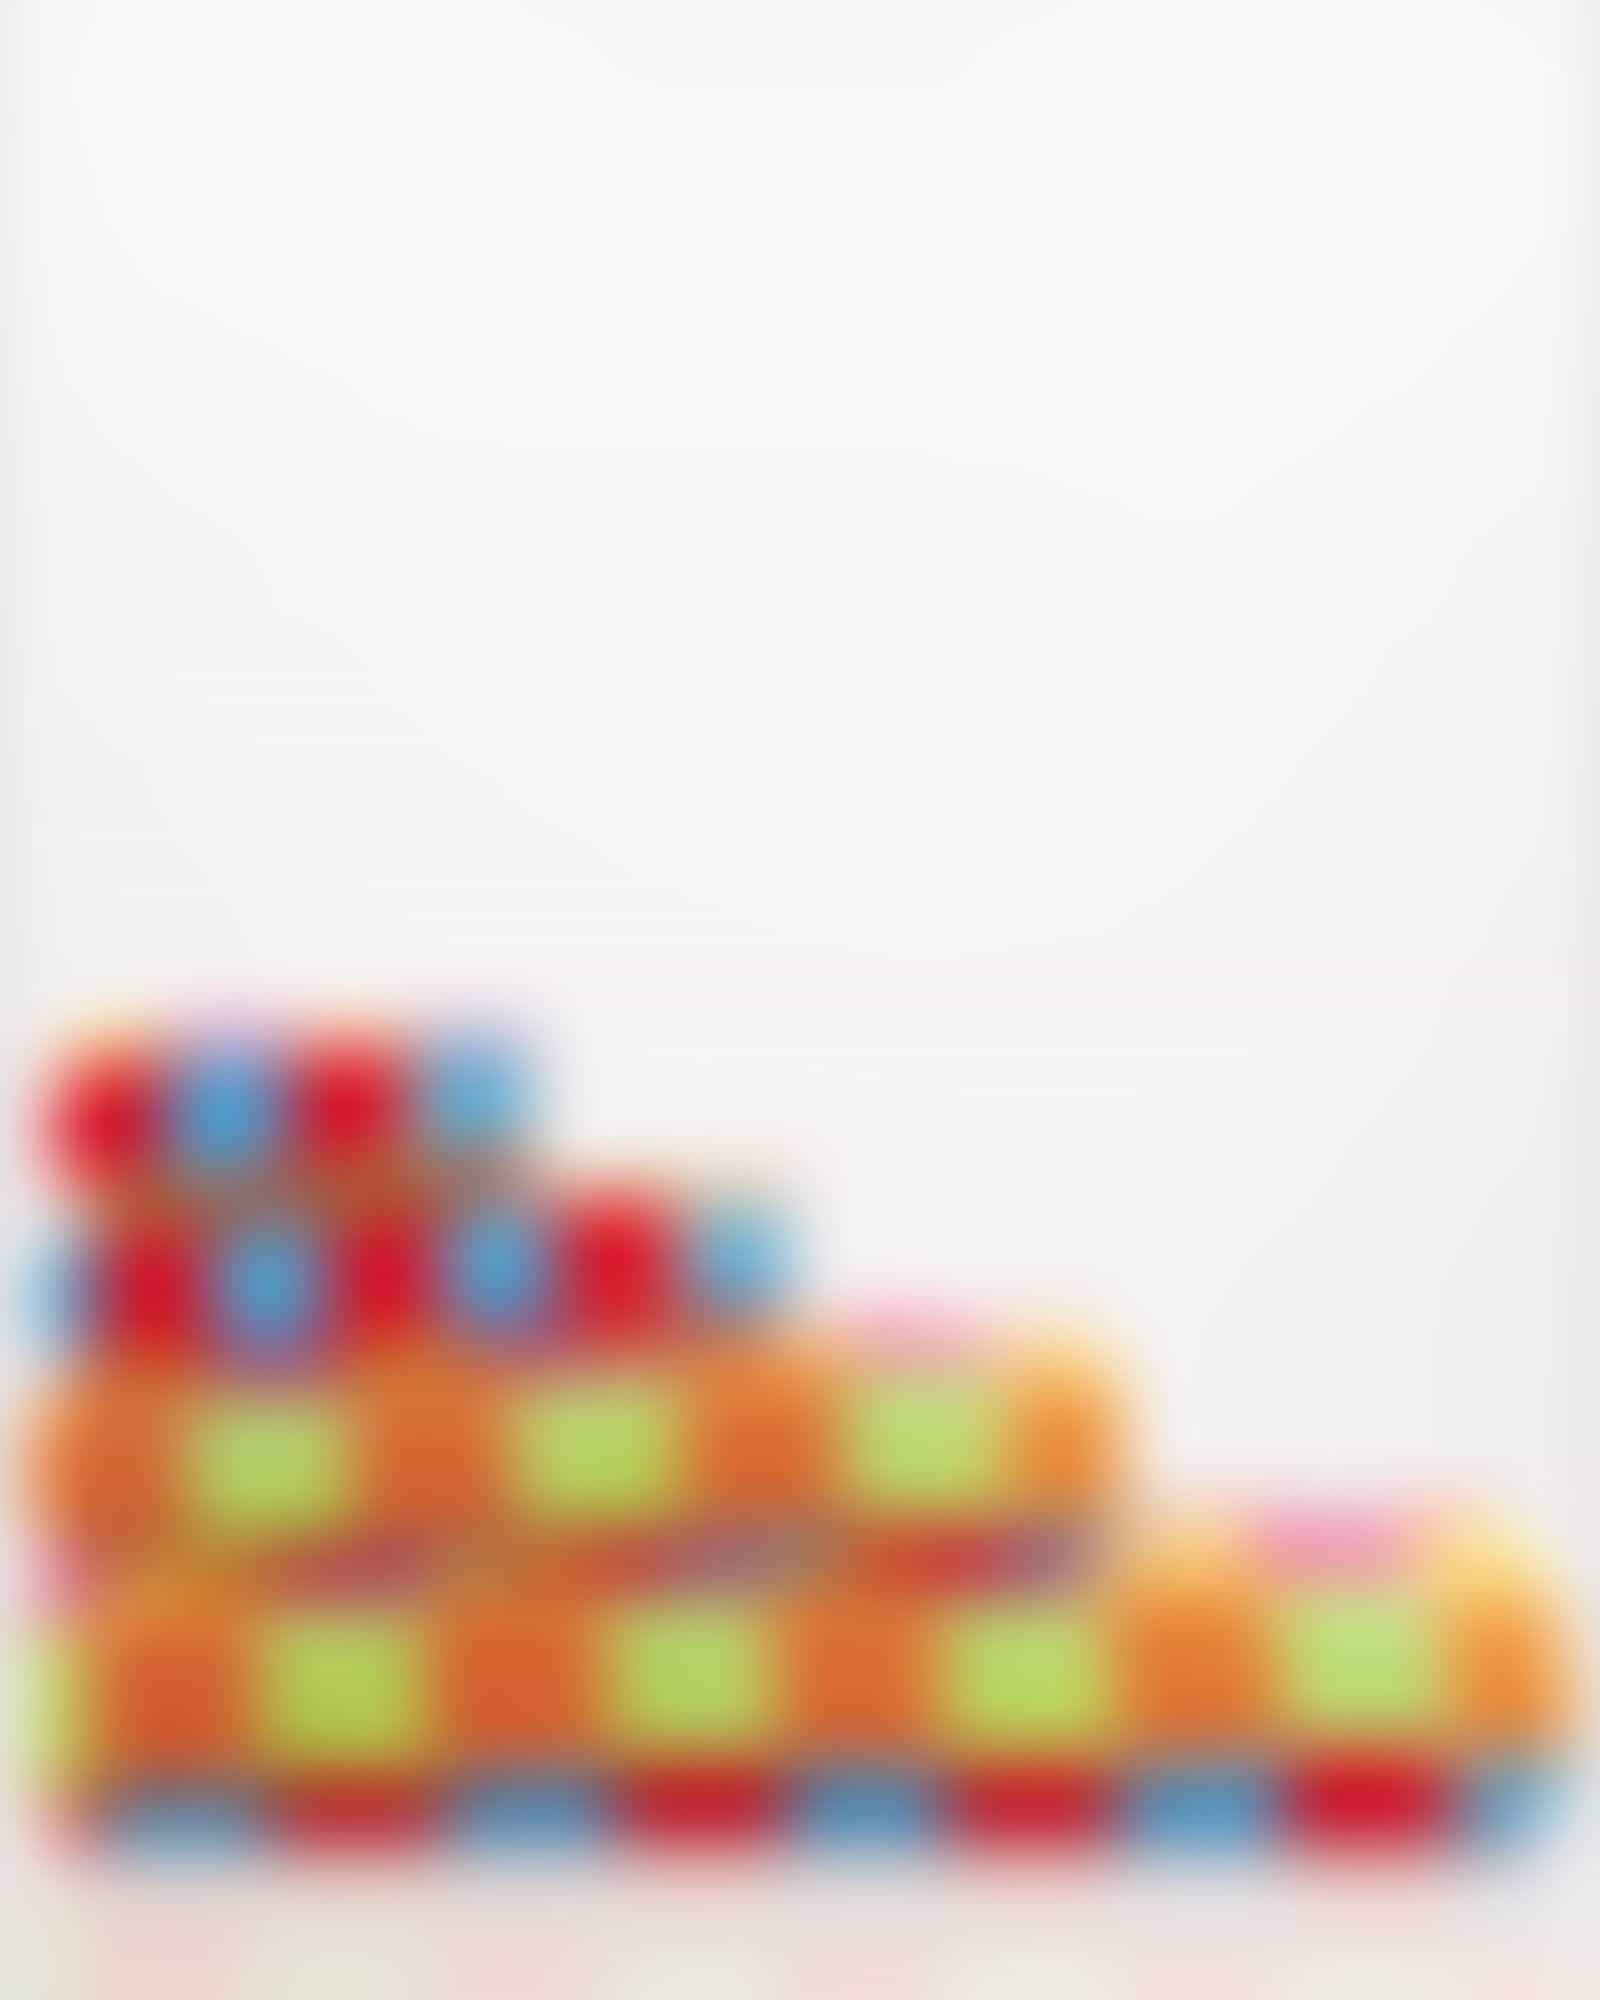 Cawö - Life Style Karo 7017 - Farbe: multicolor - 25 - Saunatuch 70x180 cm